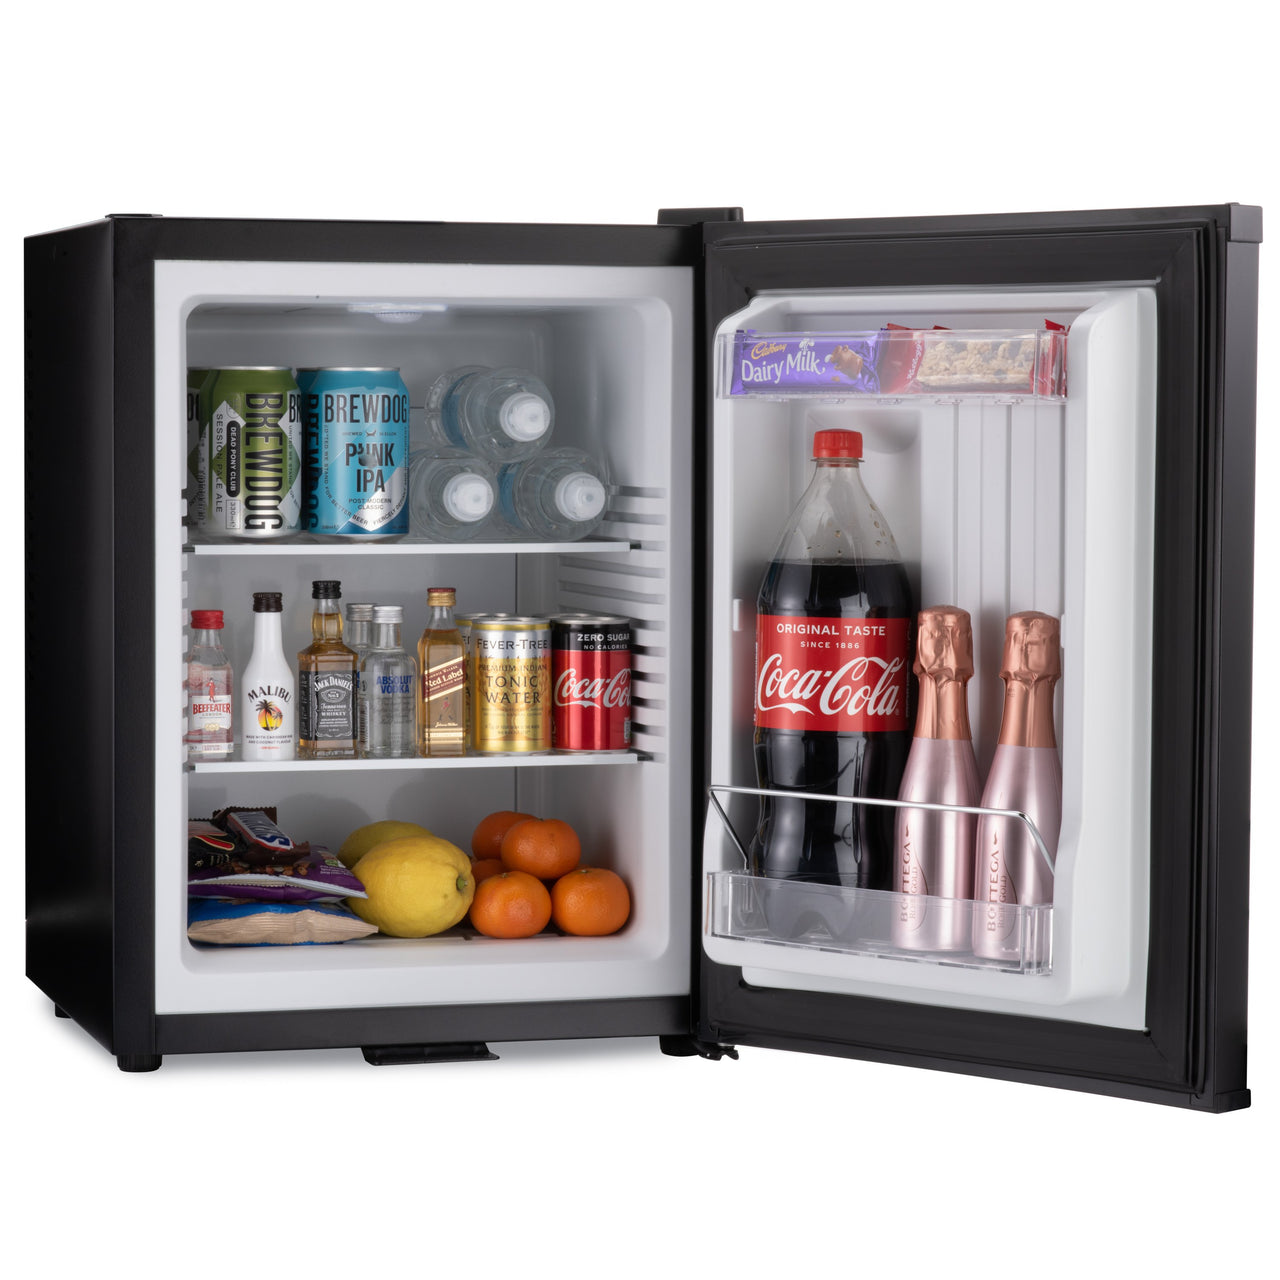 Mini bar fridge 40 litre with snacks and drinks inside